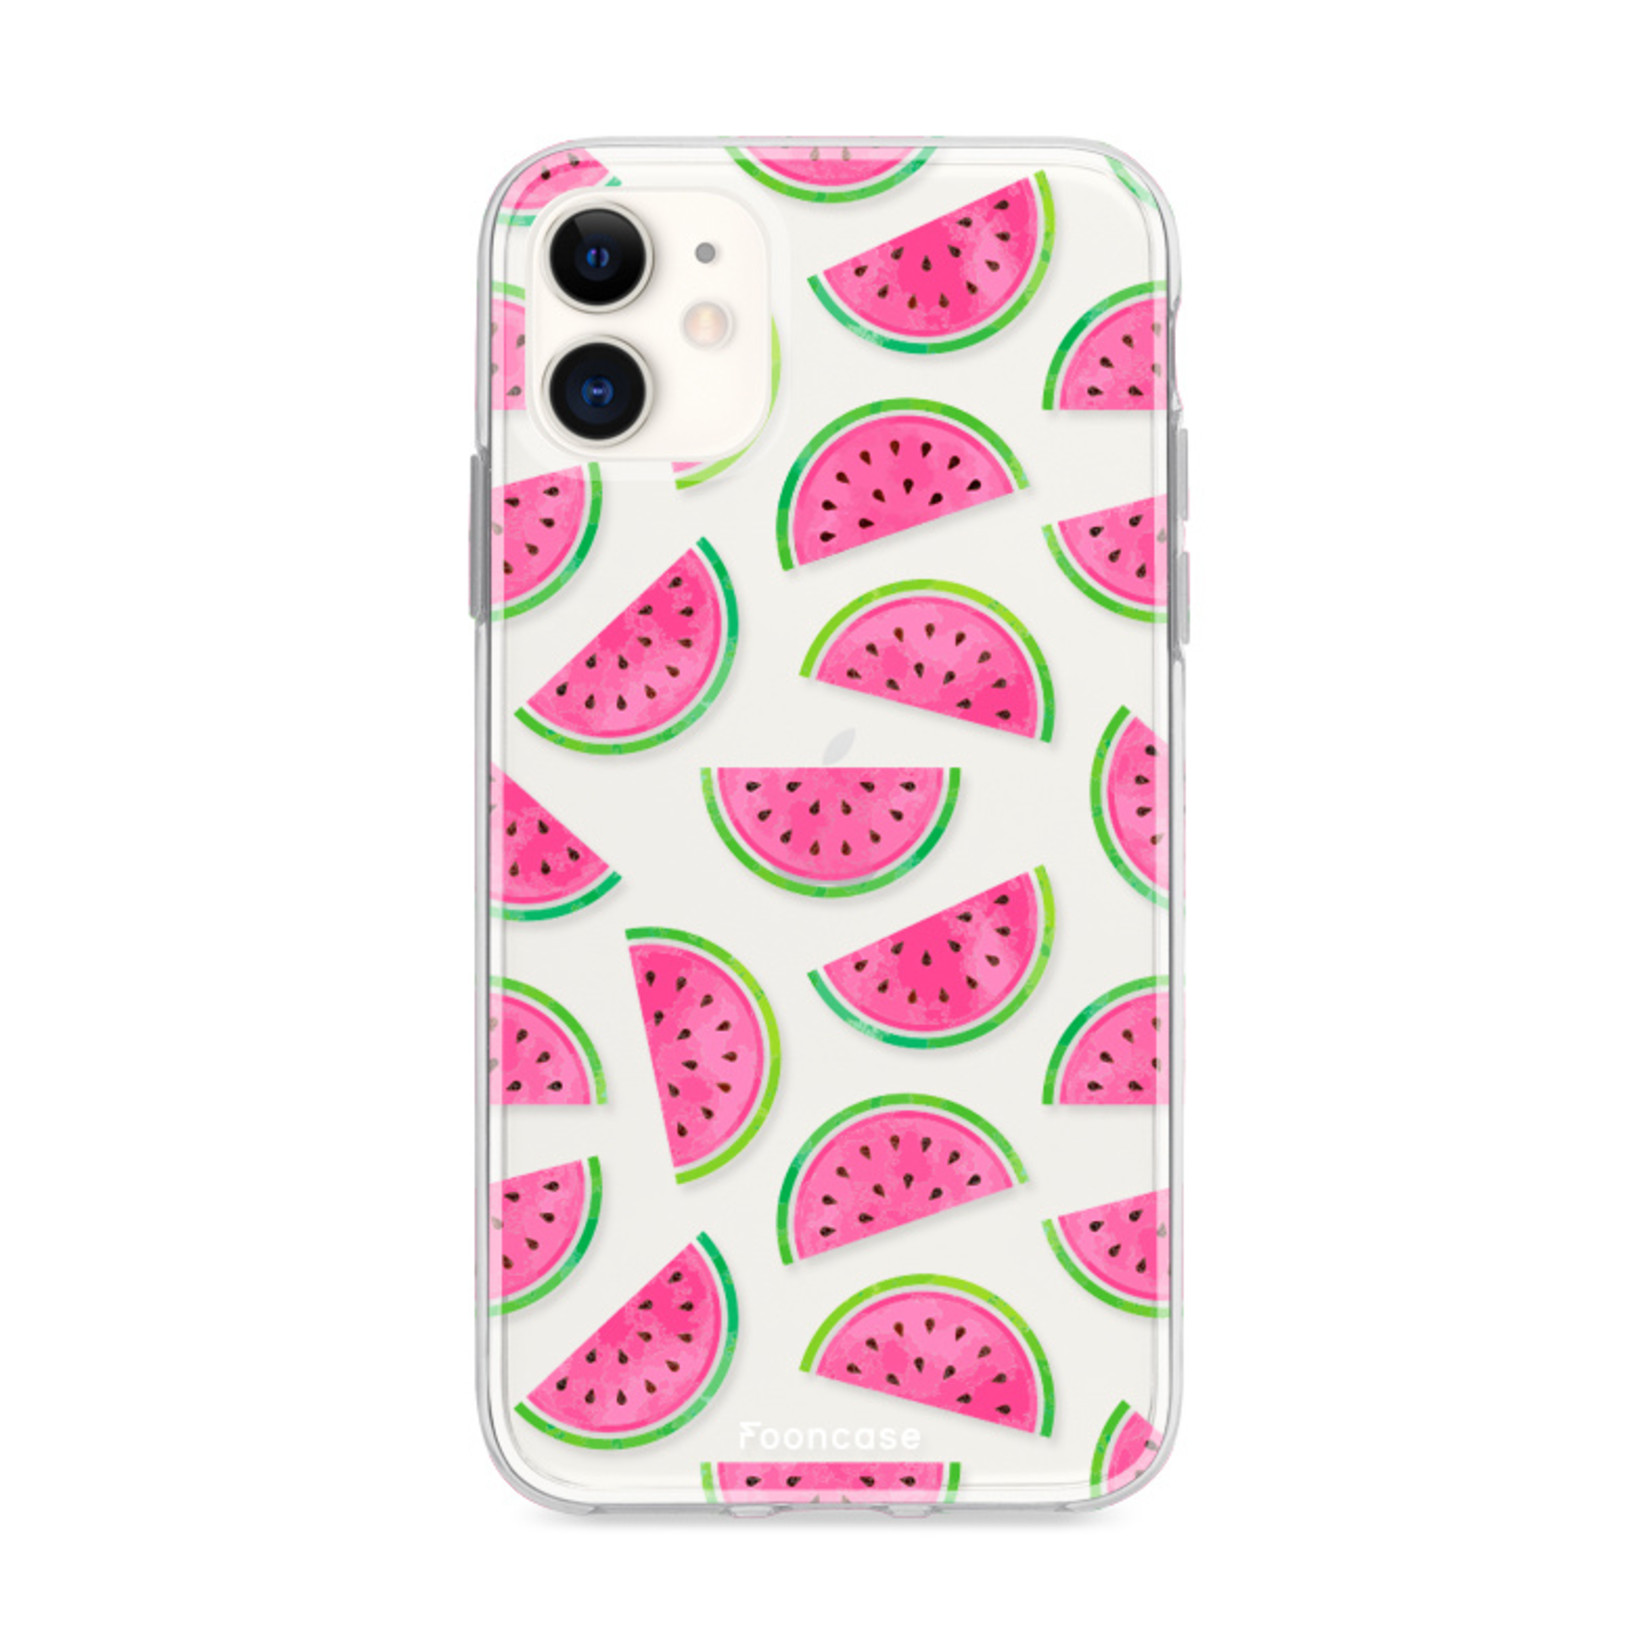 FOONCASE iPhone 12 Mini hoesje TPU Soft Case - Back Cover - Watermeloen